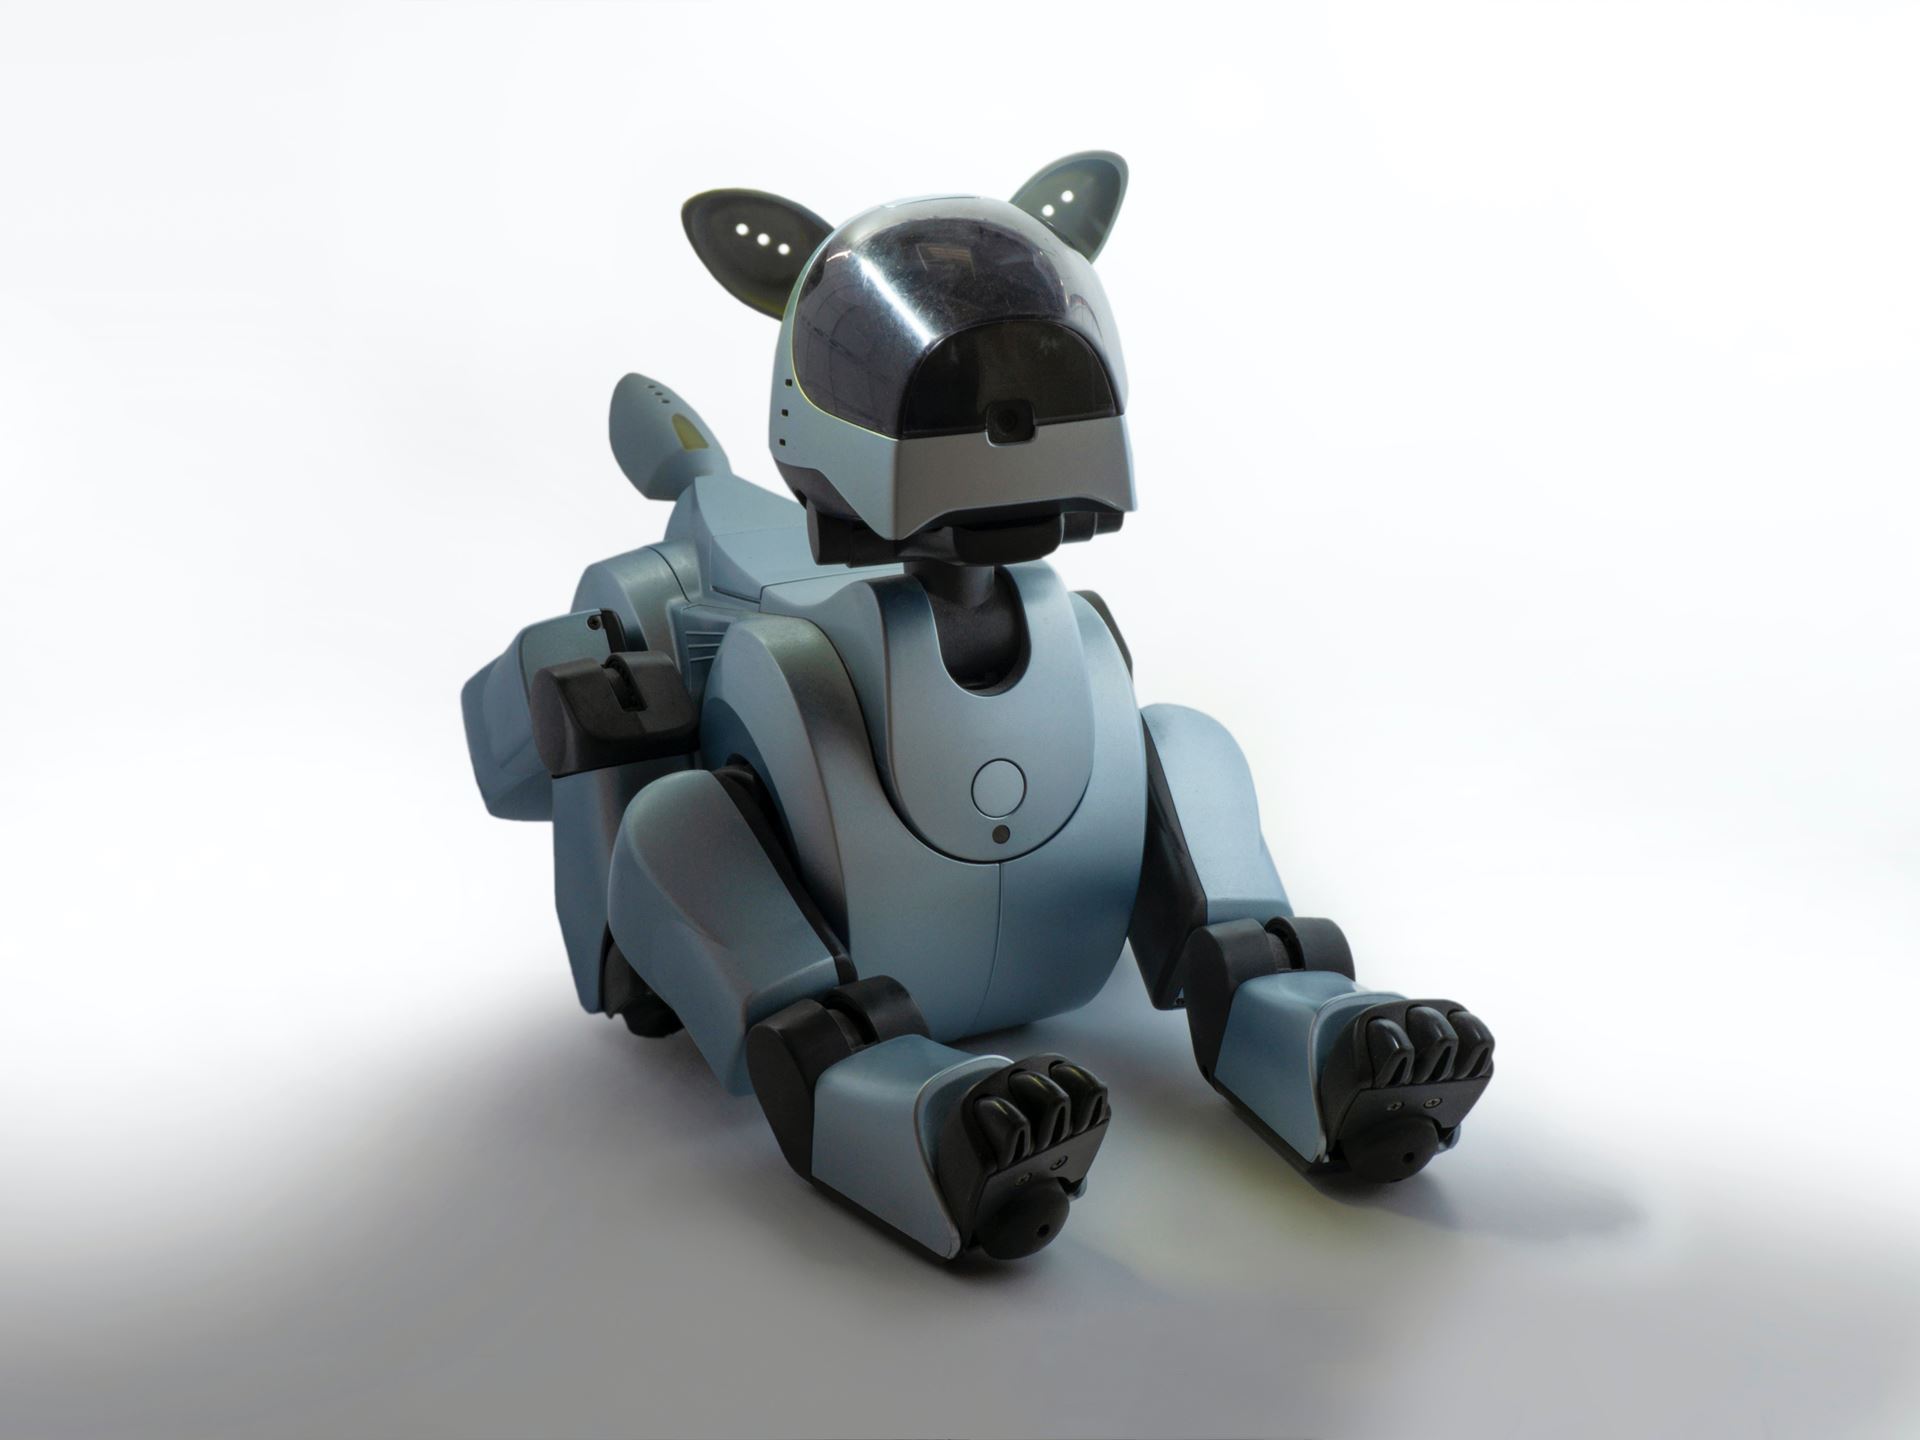 Photo of a robot dog.